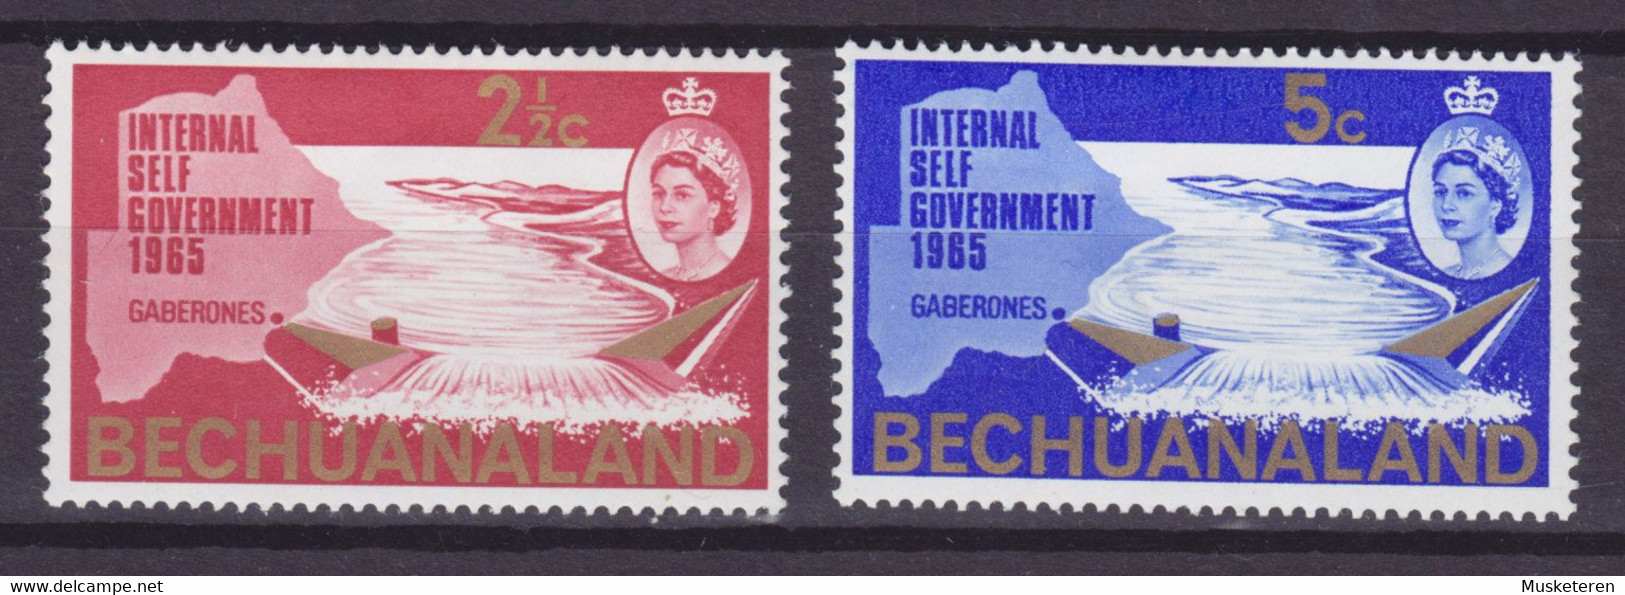 Bechuanaland 1965 Mi. 173-74    2c. & 5c. Self Government Landkarte Notwani River, MH** - 1965-1966 Self Government